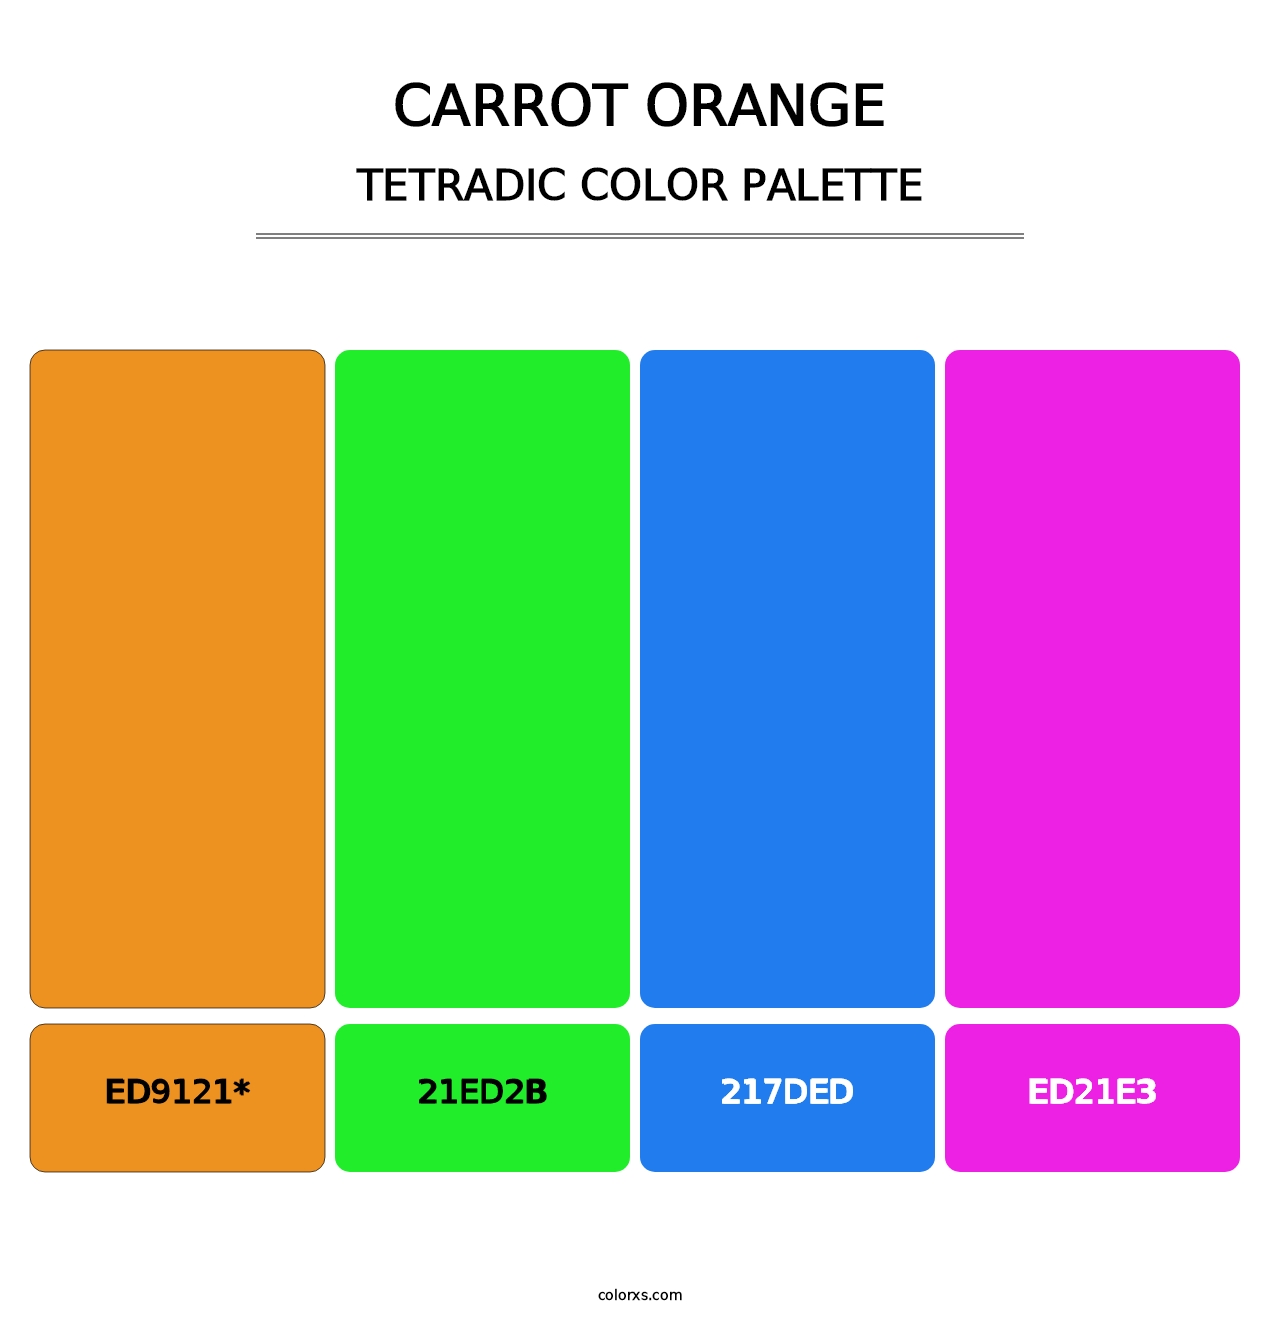 Carrot Orange - Tetradic Color Palette